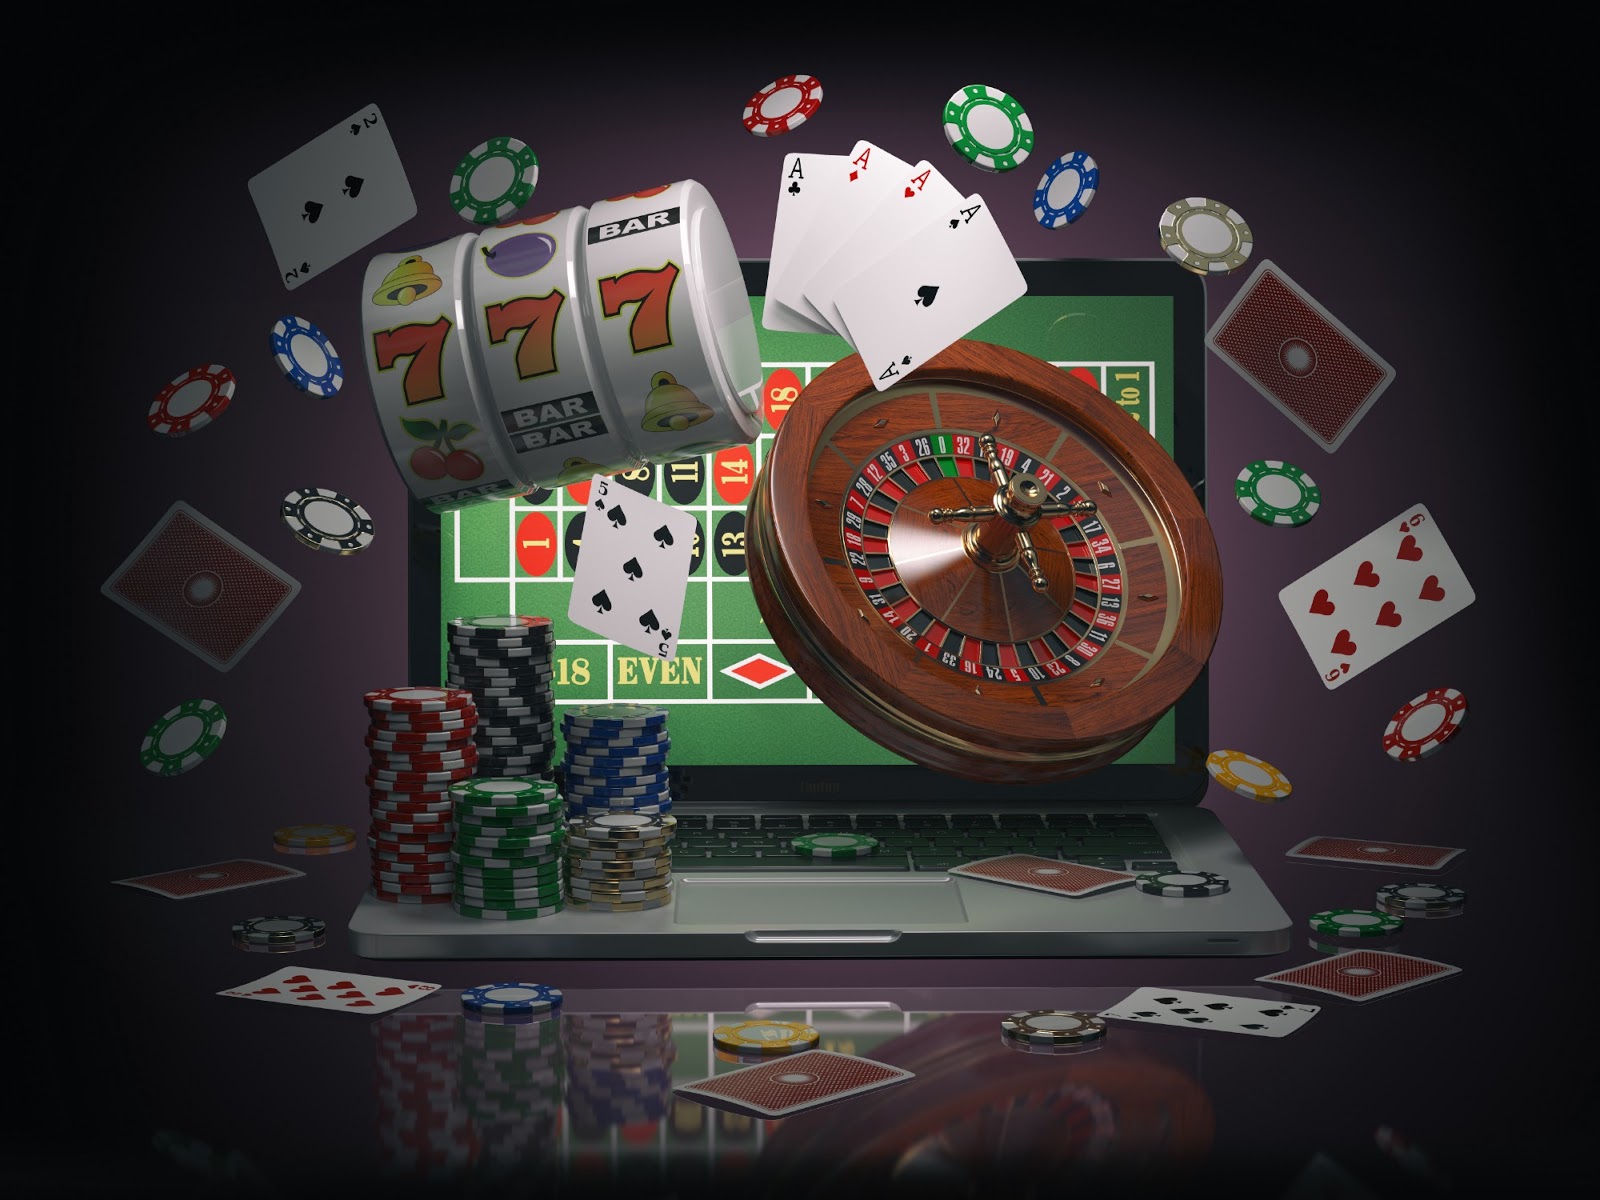 casino bet